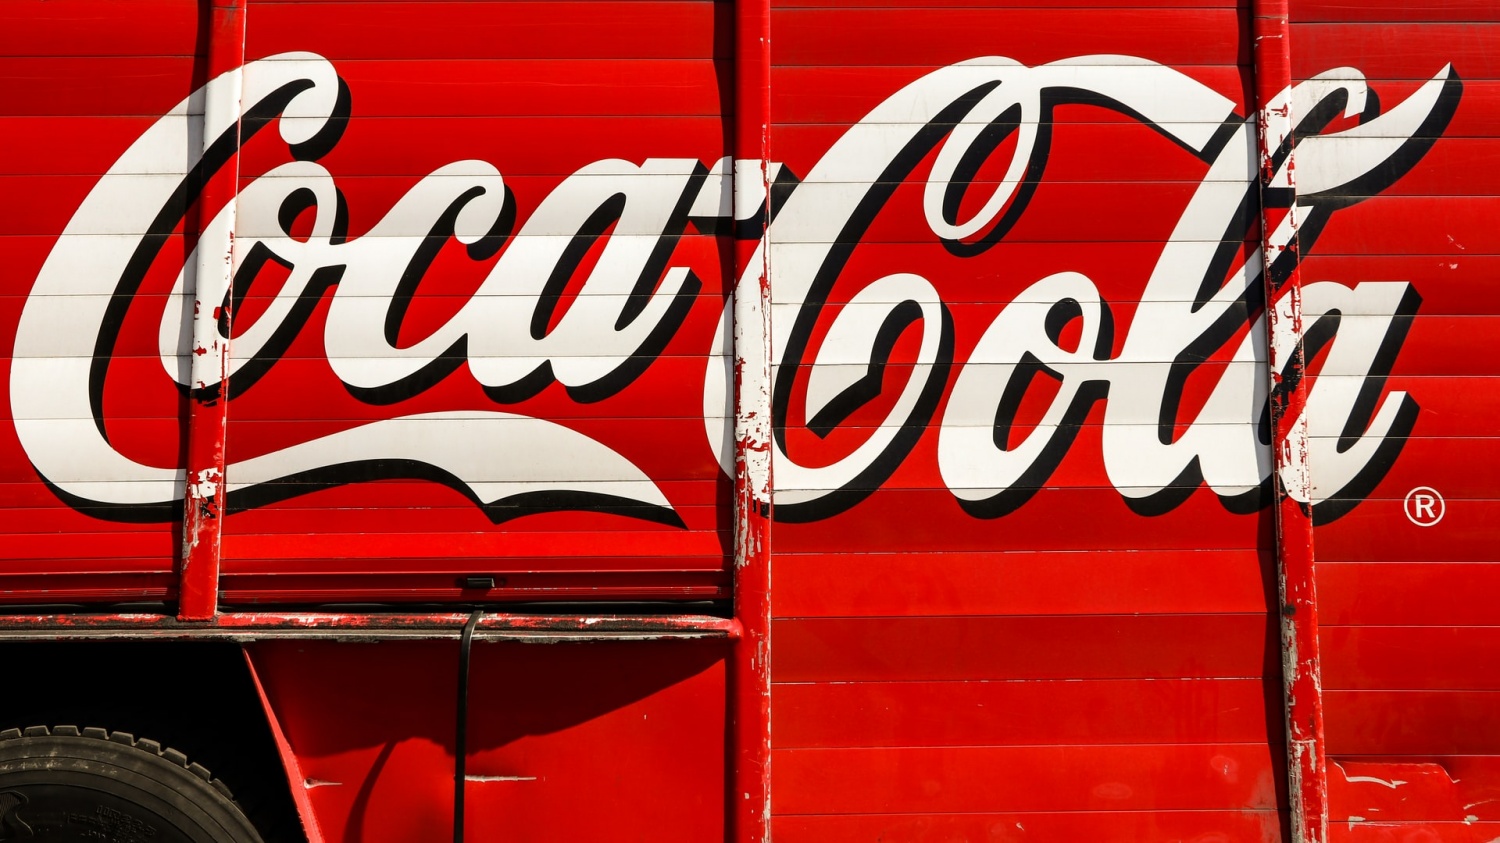 Coca-Cola Company to Complete Acquisition of BodyArmor For $5.6 Billion: Report